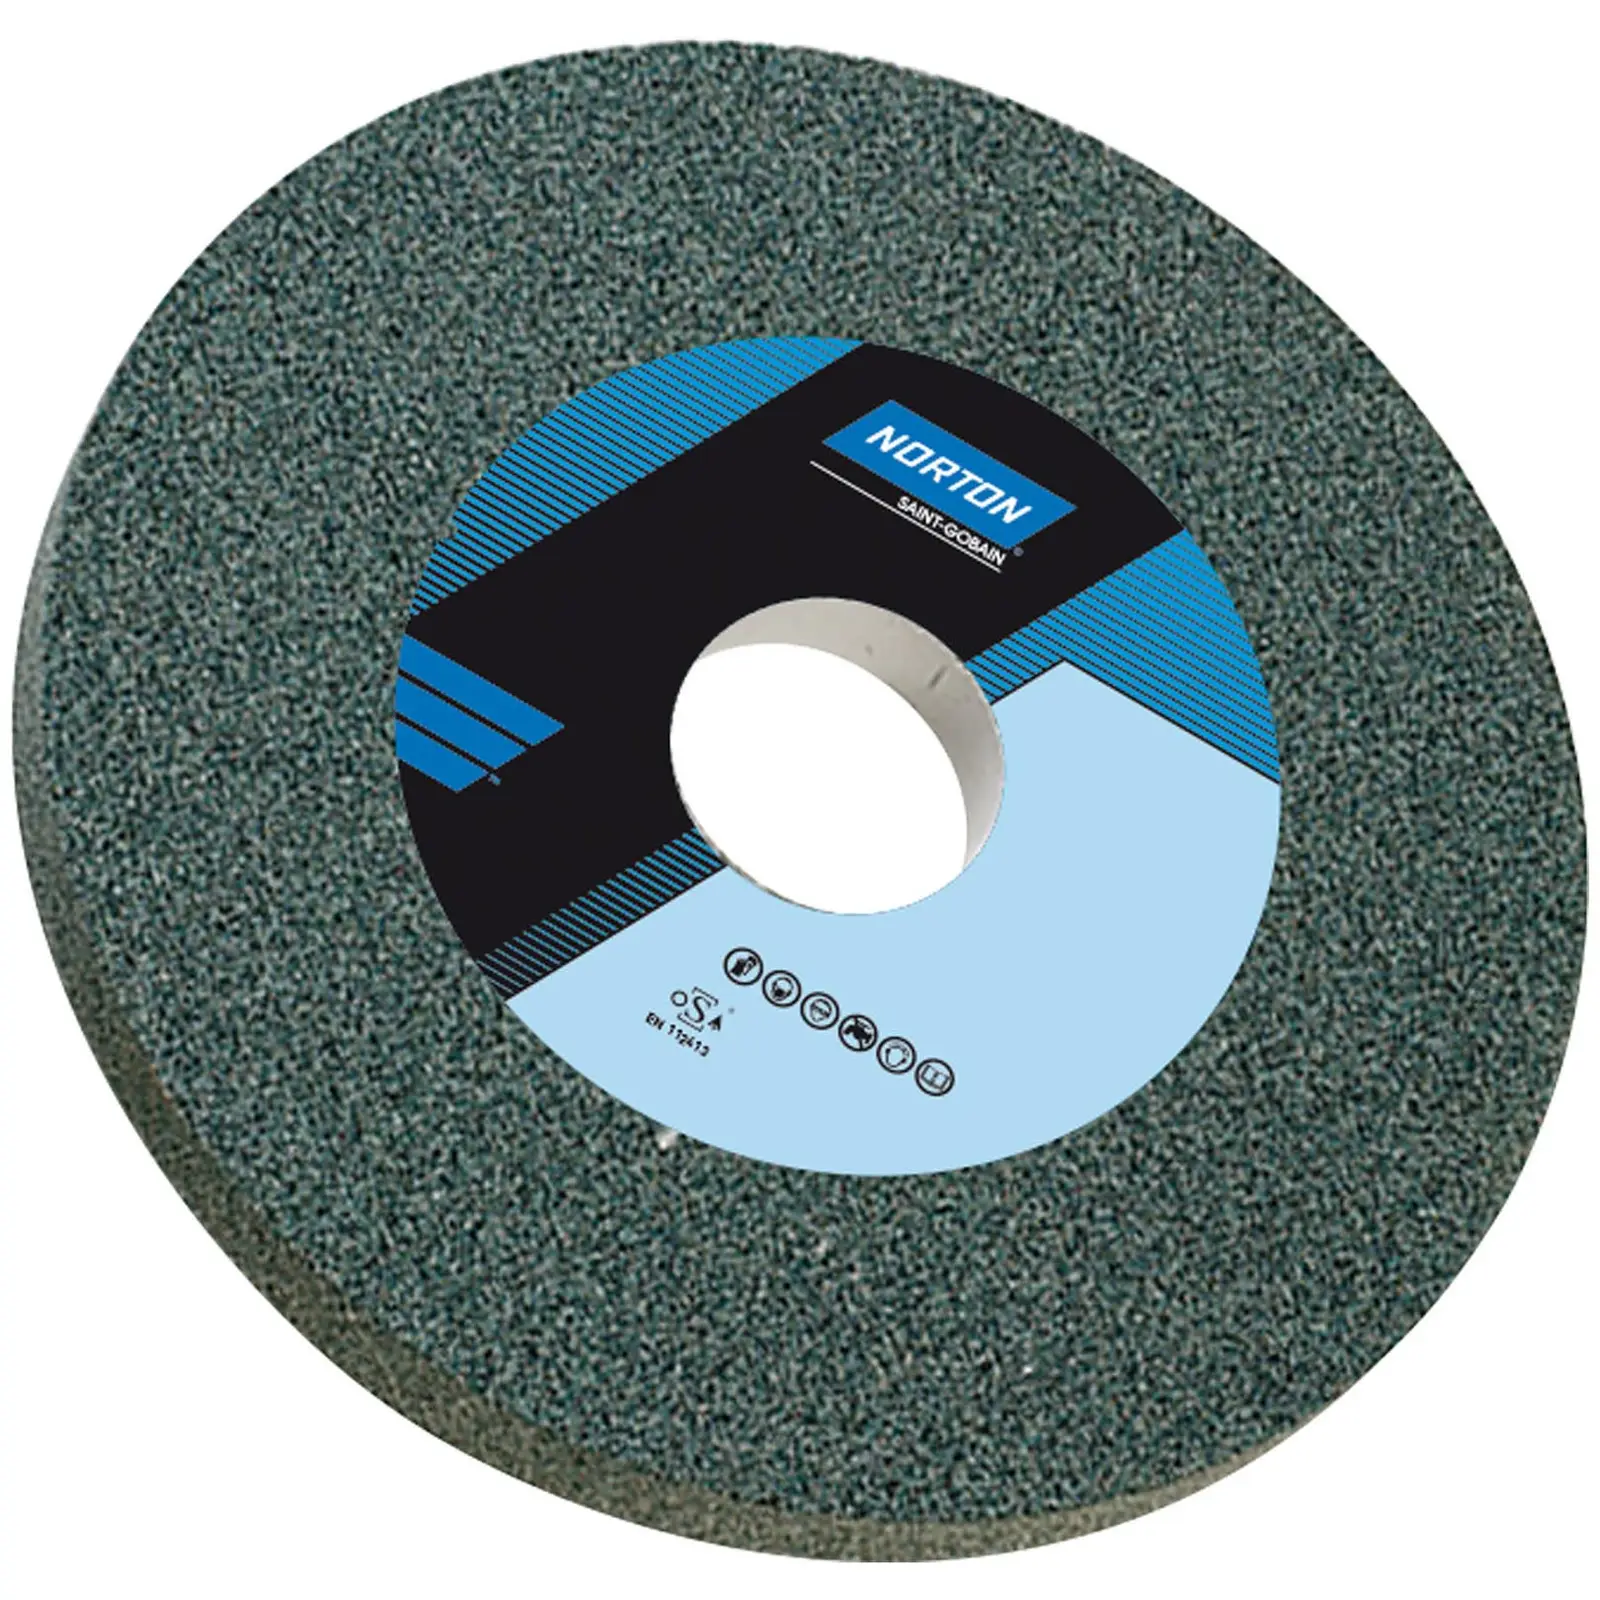 Grinding Wheel - Ø 250 mm - 46 grit - hardness grade K - Silicon carbide (green)